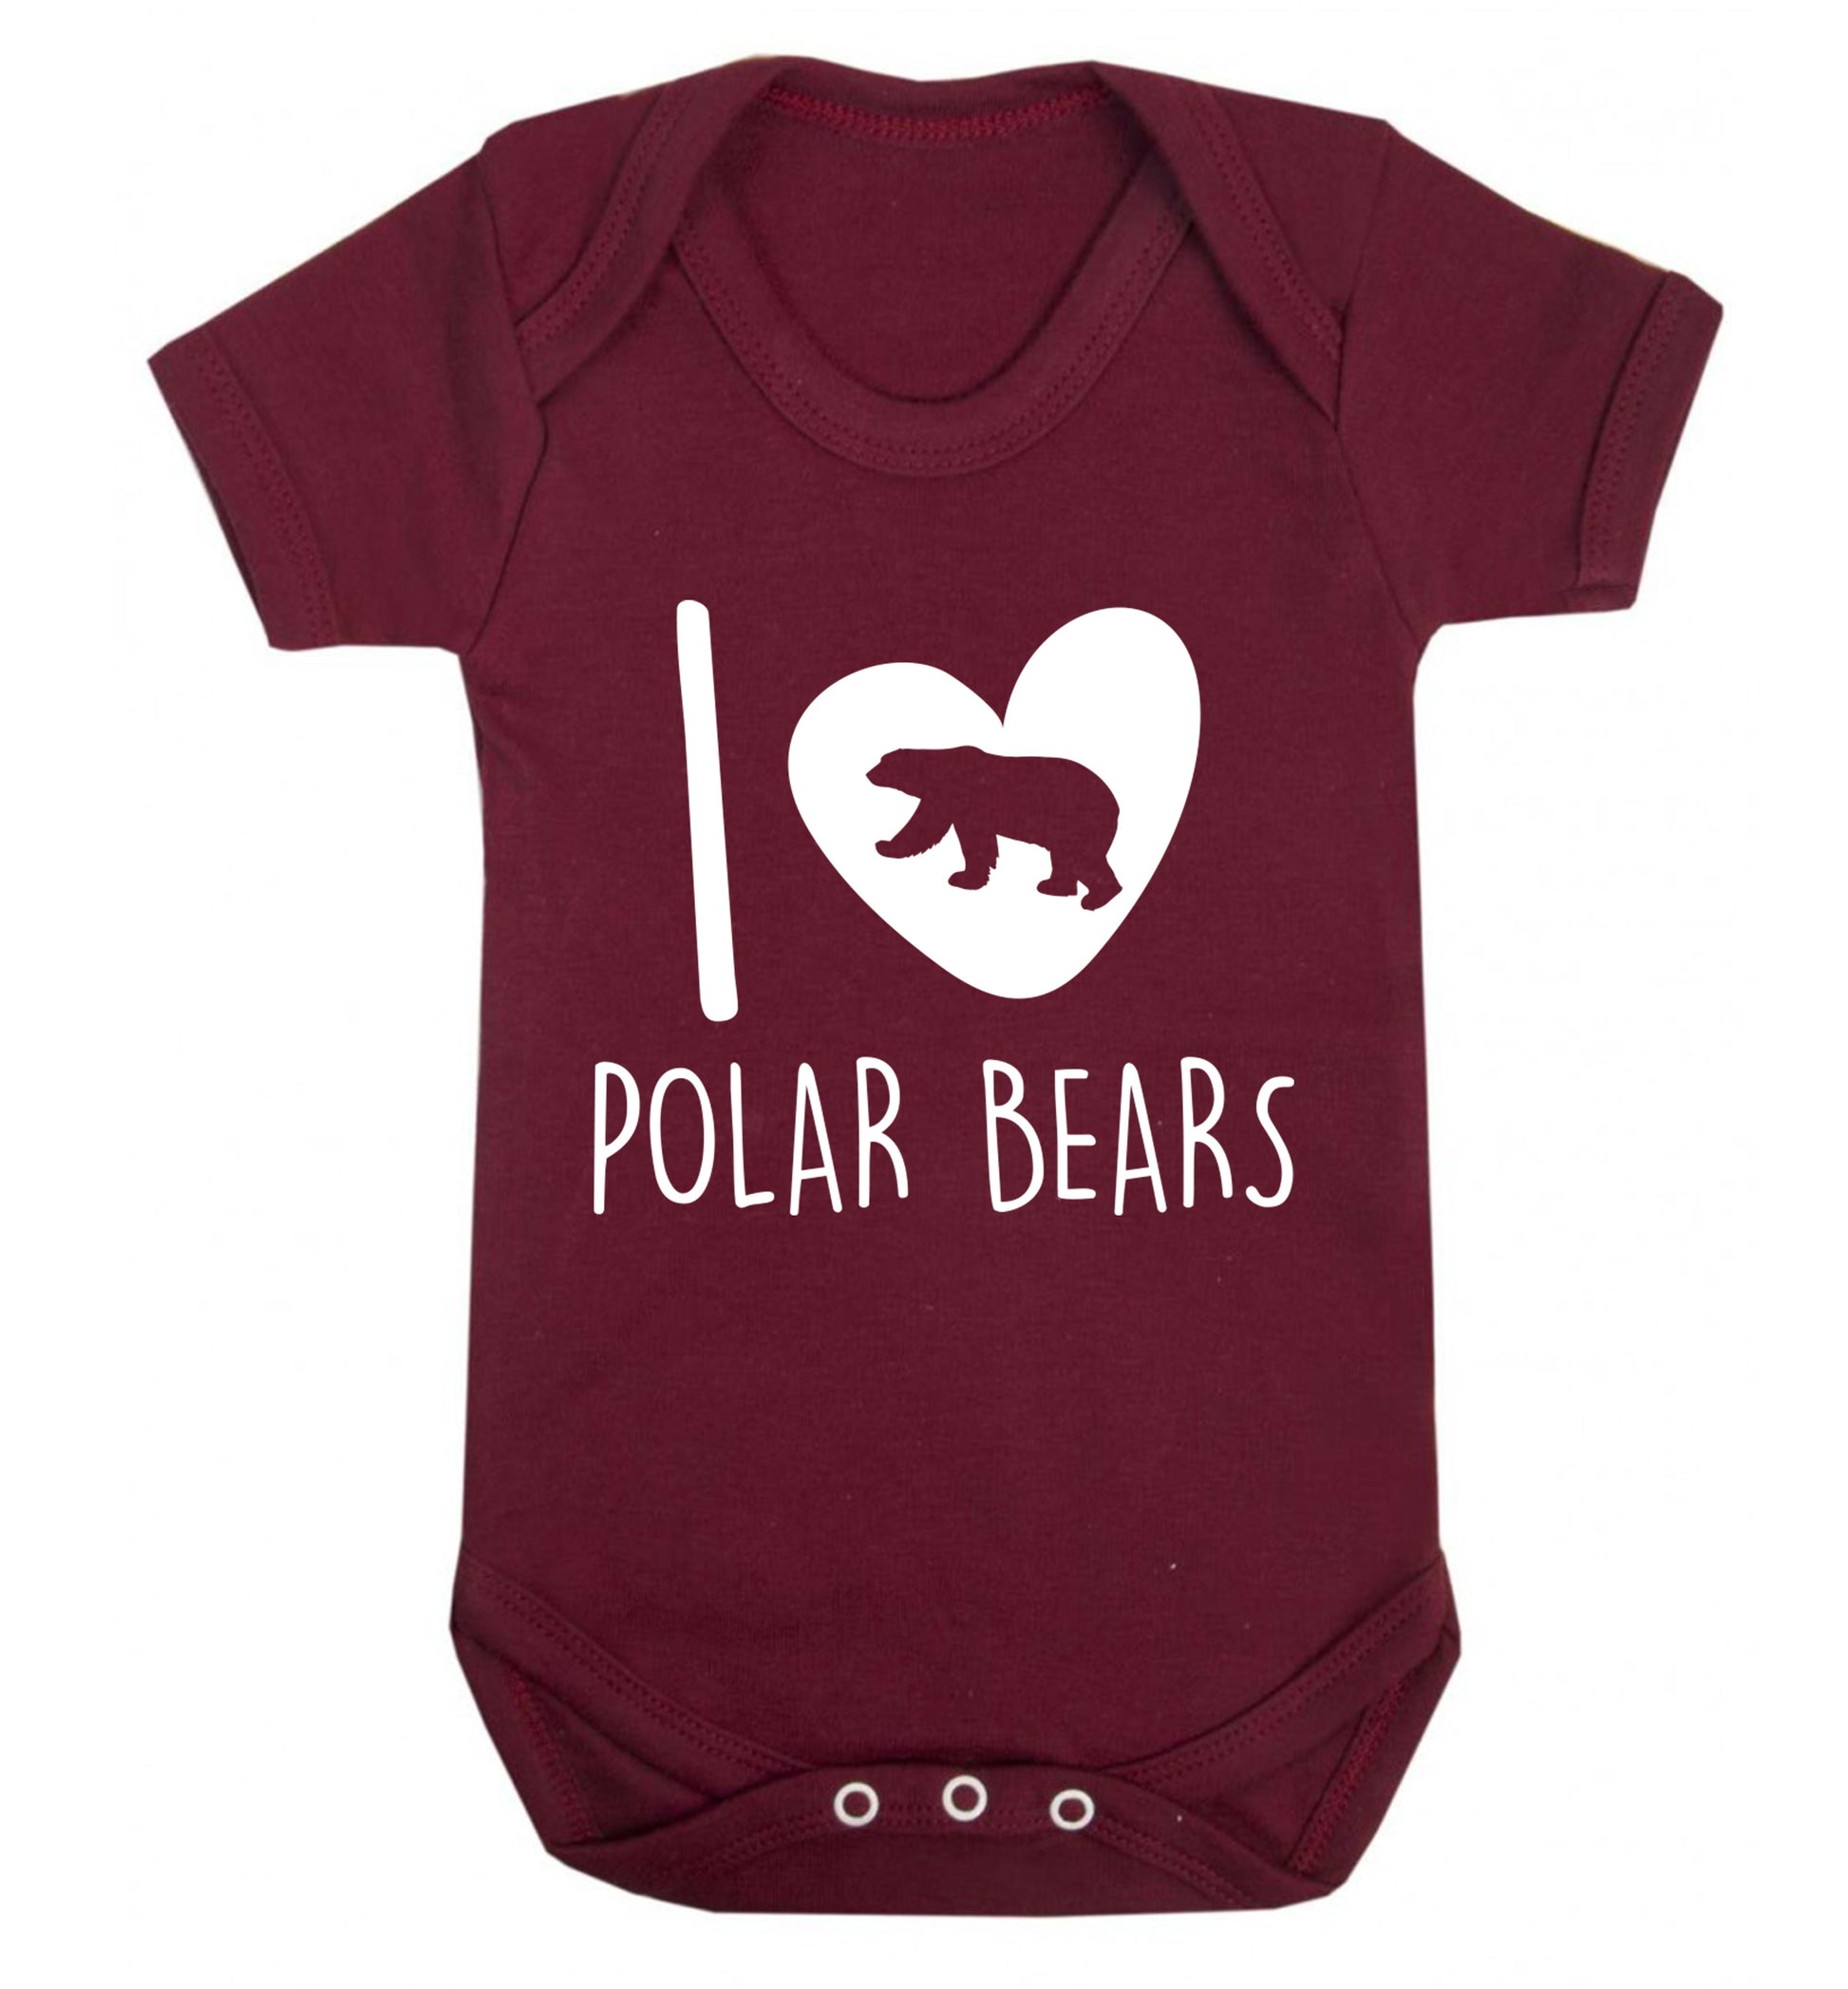 I Love Polar Bears Baby Vest maroon 18-24 months